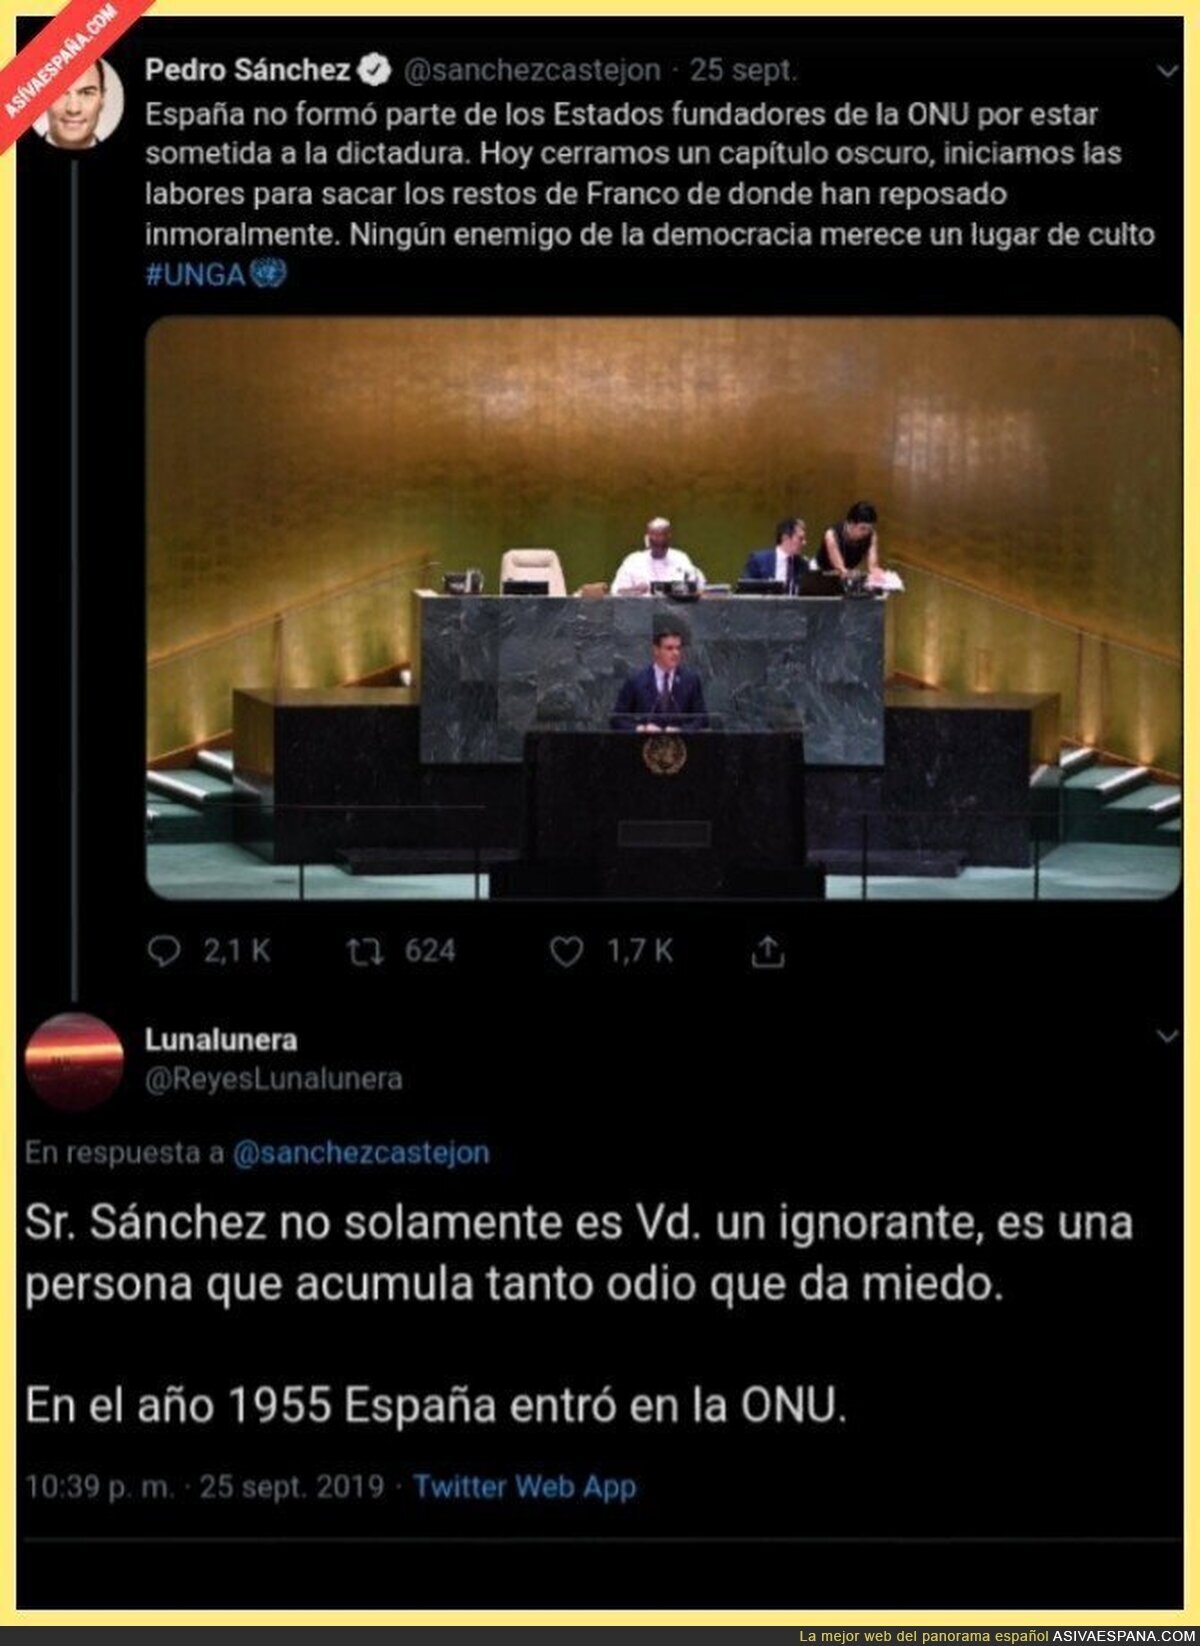 La mentira histórica de Pedro Sánchez